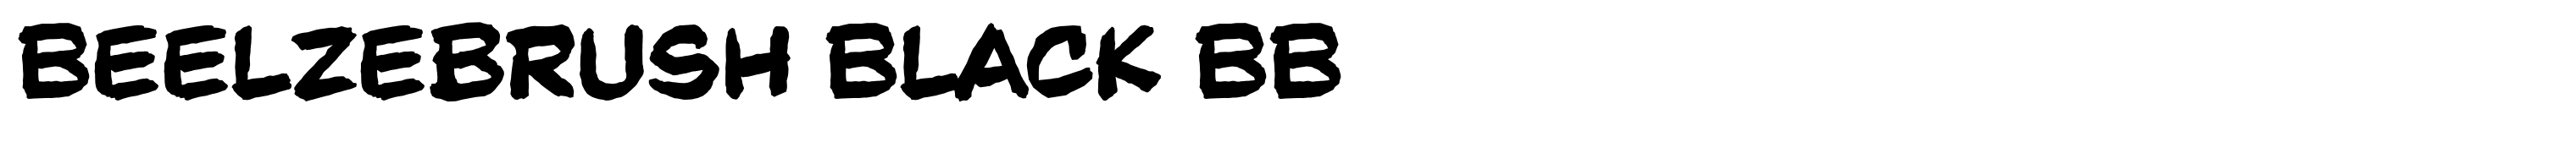 Beelzebrush Black BB